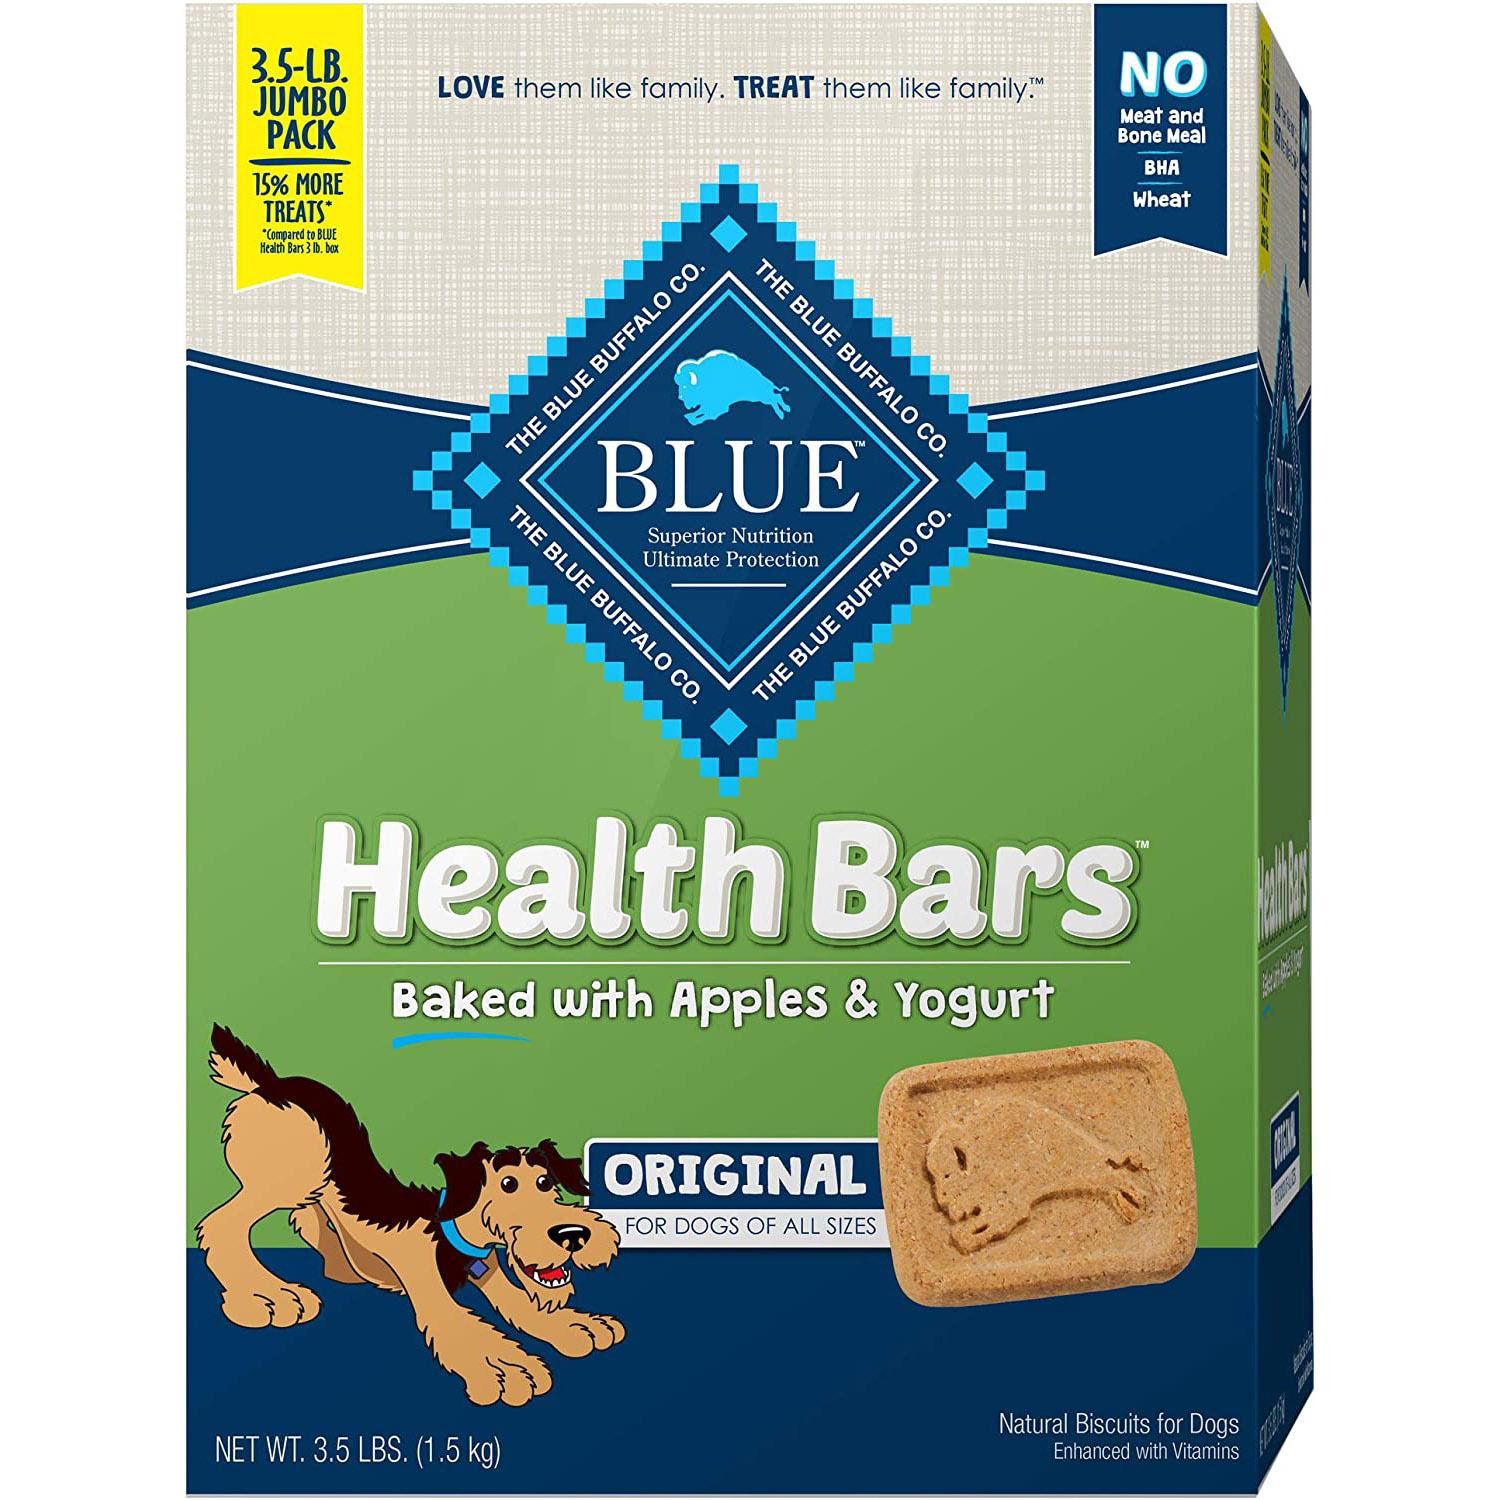 Blue Buffalo Natural Crunchy Dog Treats for $11.62 Shipped